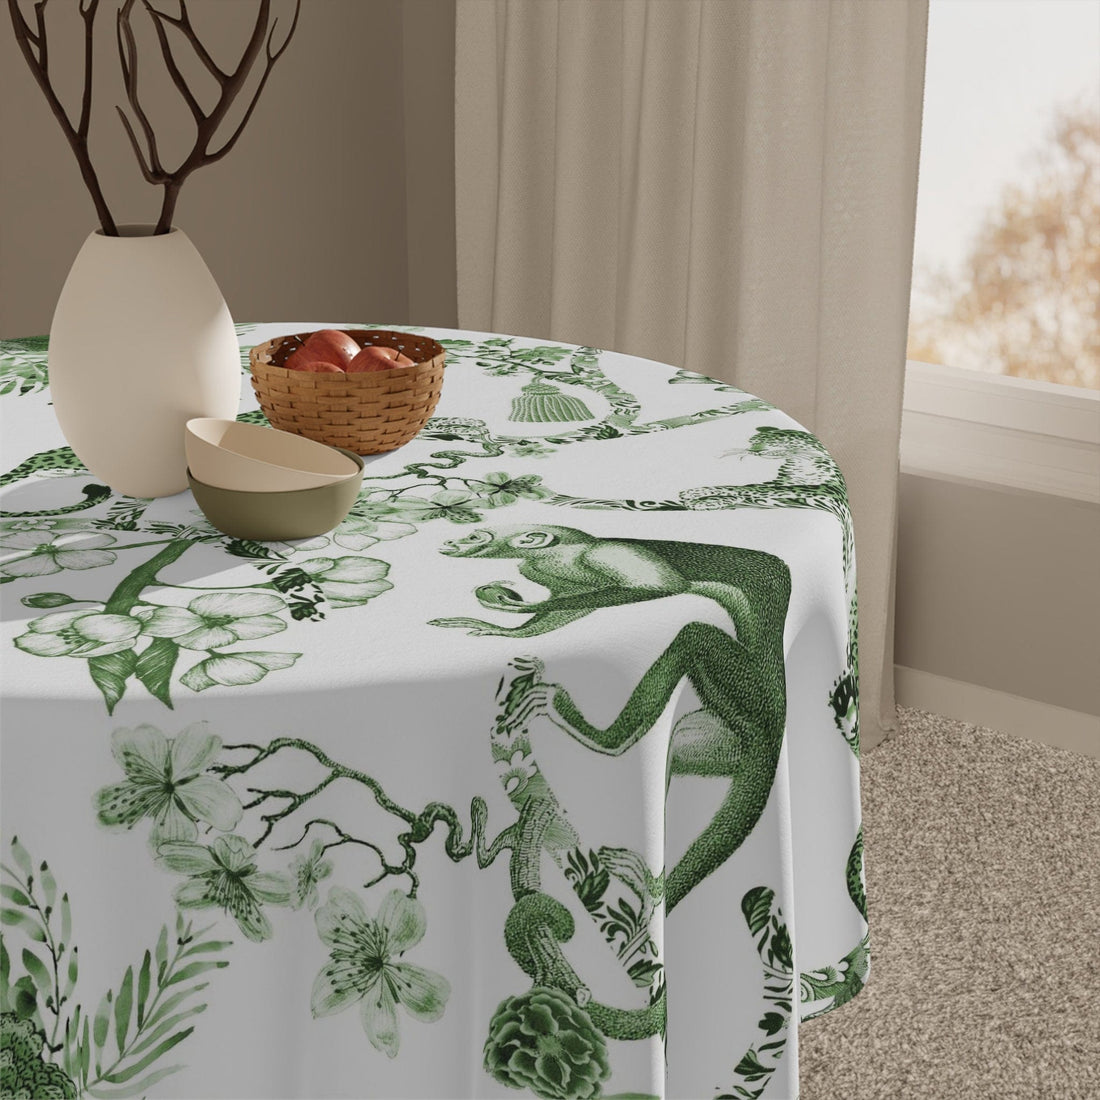 Kate McEnroe New York Chinoiserie Botanical Toile Tablecloth, Floral Green, White Chinoiserie Jungle, Country Farmhouse Table Decor, Grandmillenial Kitchen DecorTablecloths20990366732955140771